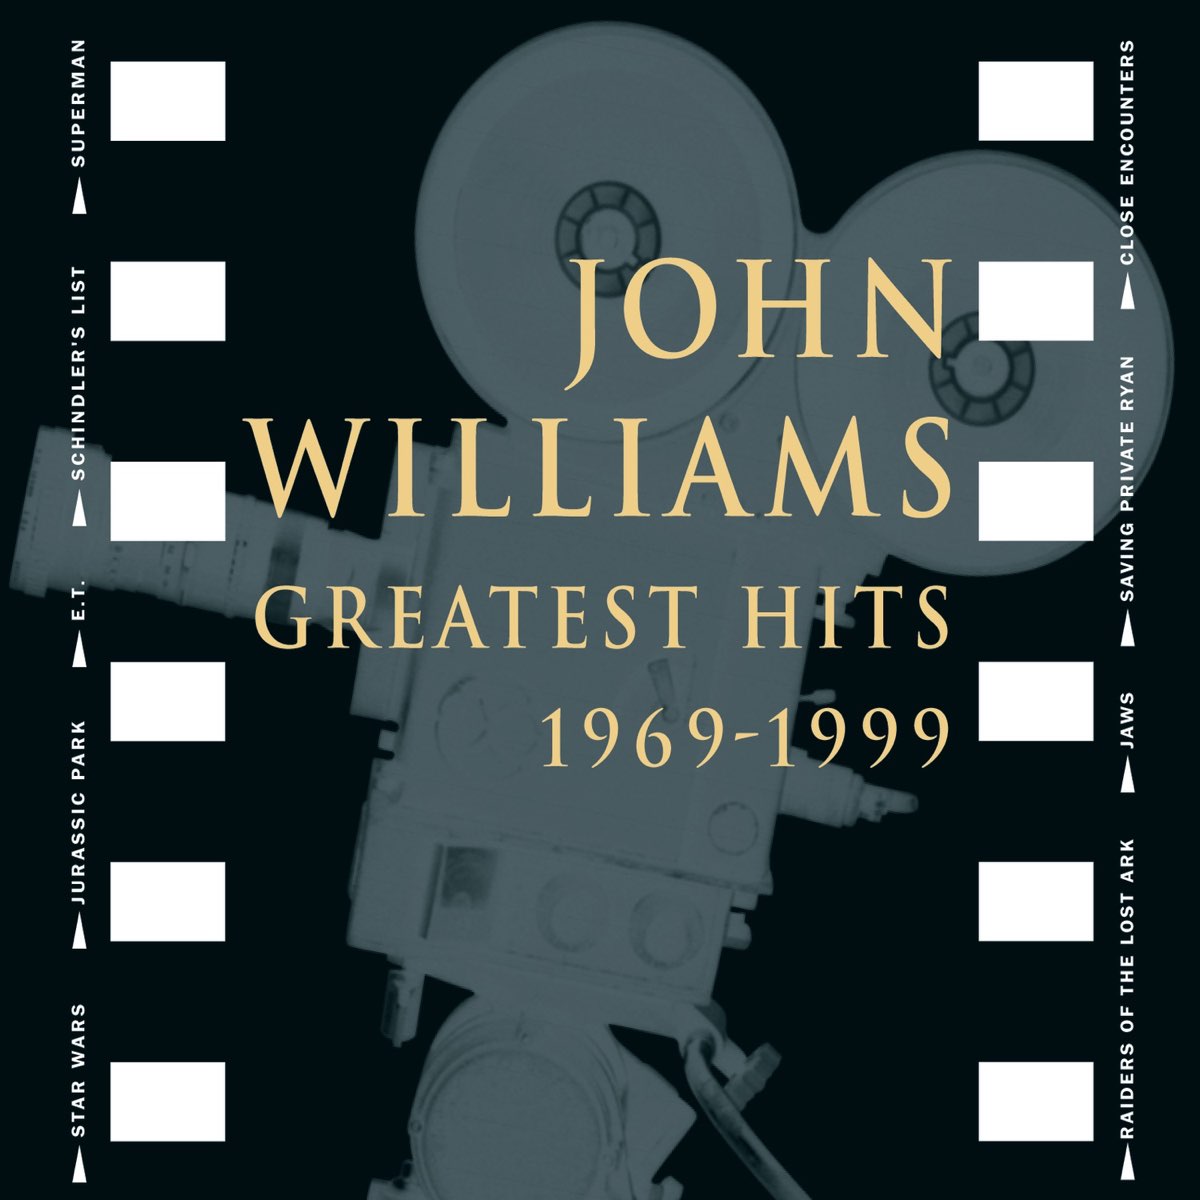 Greatest Hits 1969-1999 - Album by John Williams - Apple Music